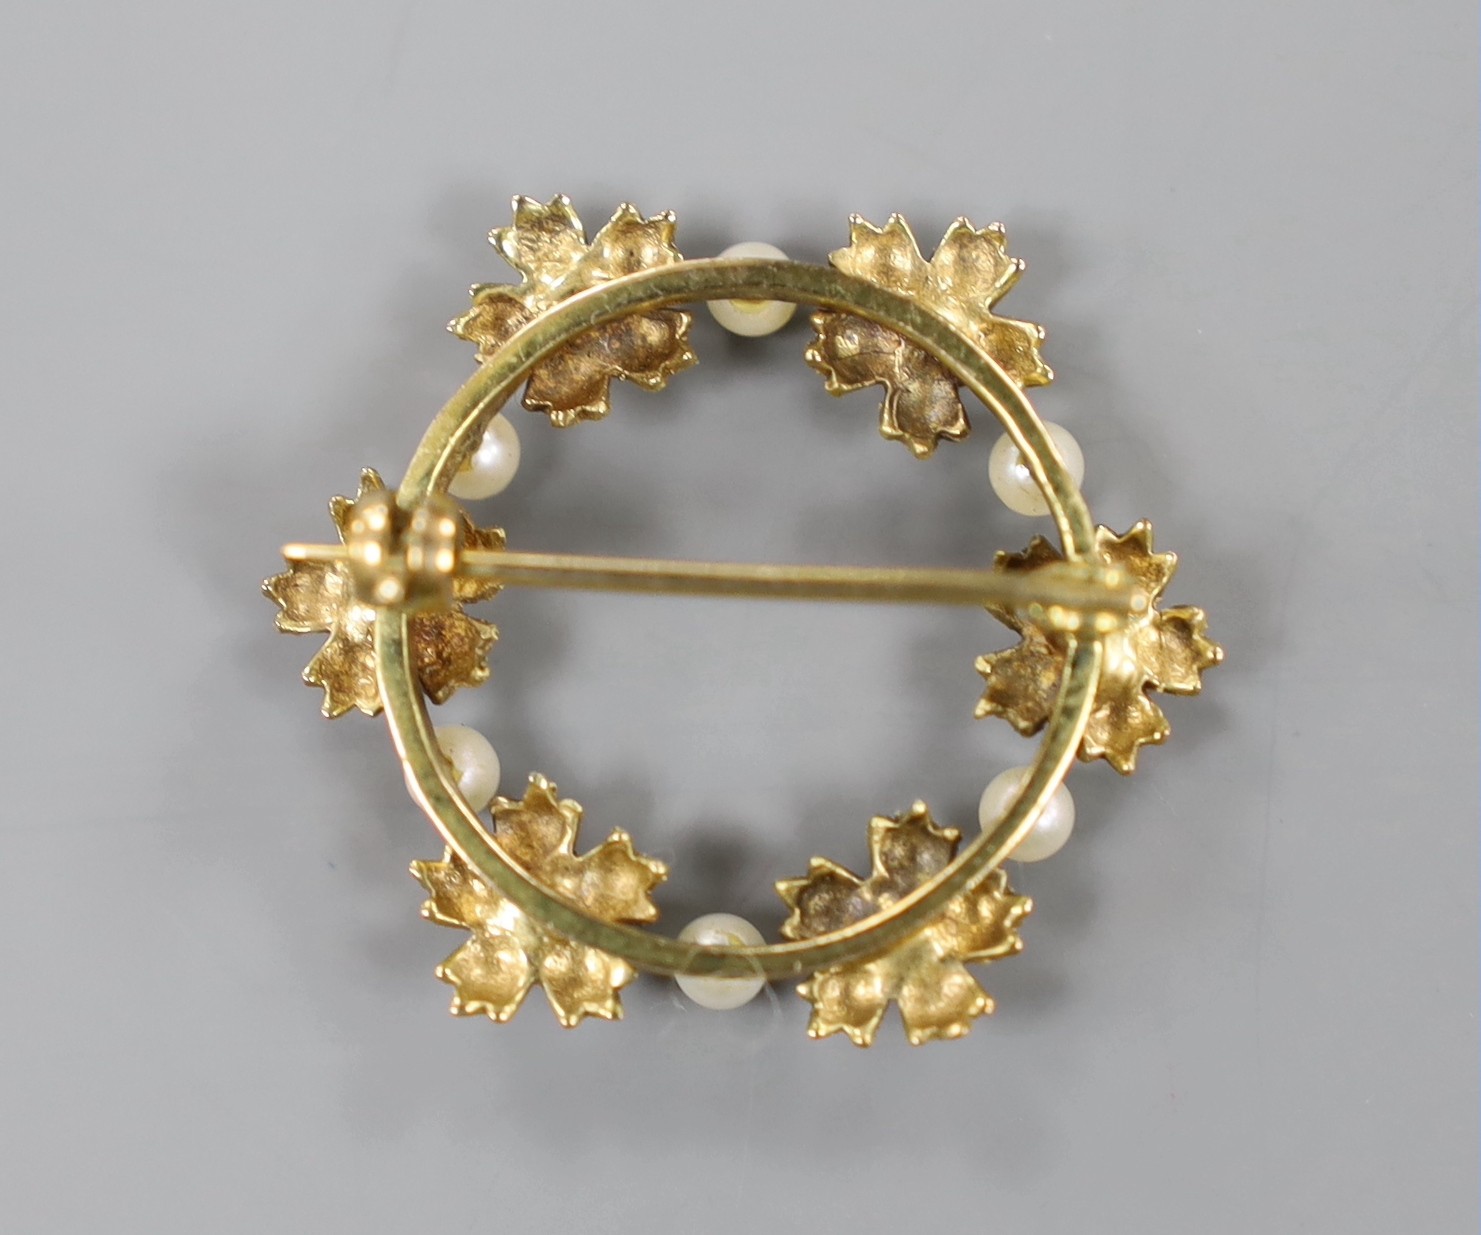 A modern 9ct gold, diamond and seed pearl set circular open work brooch, 28mm, gross weight 3.5 grams.